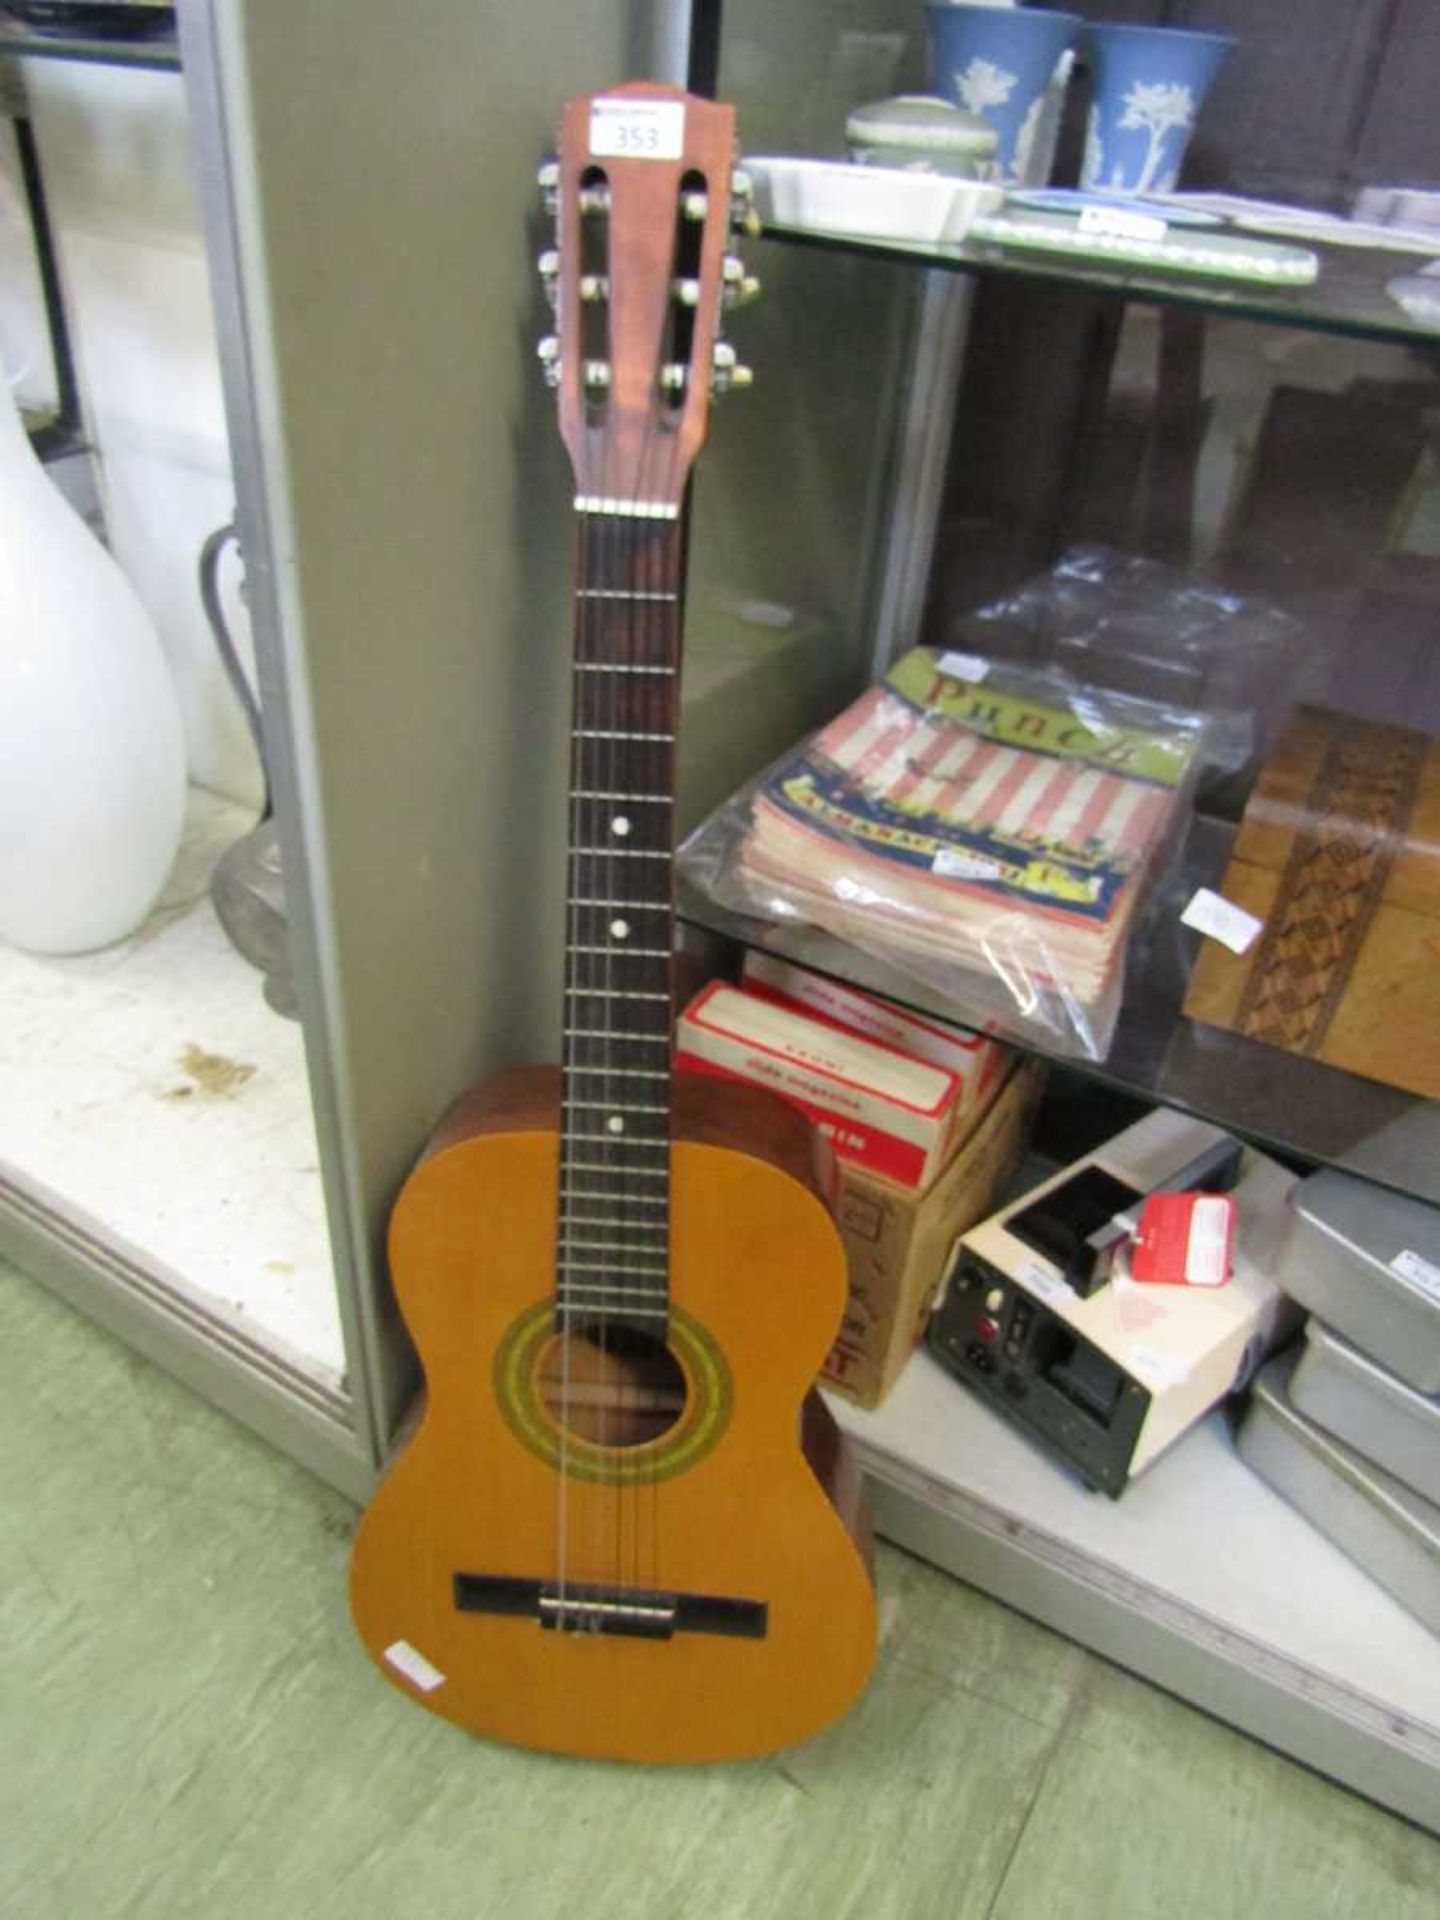 An Encore acoustic guitar, model no. ENC36N